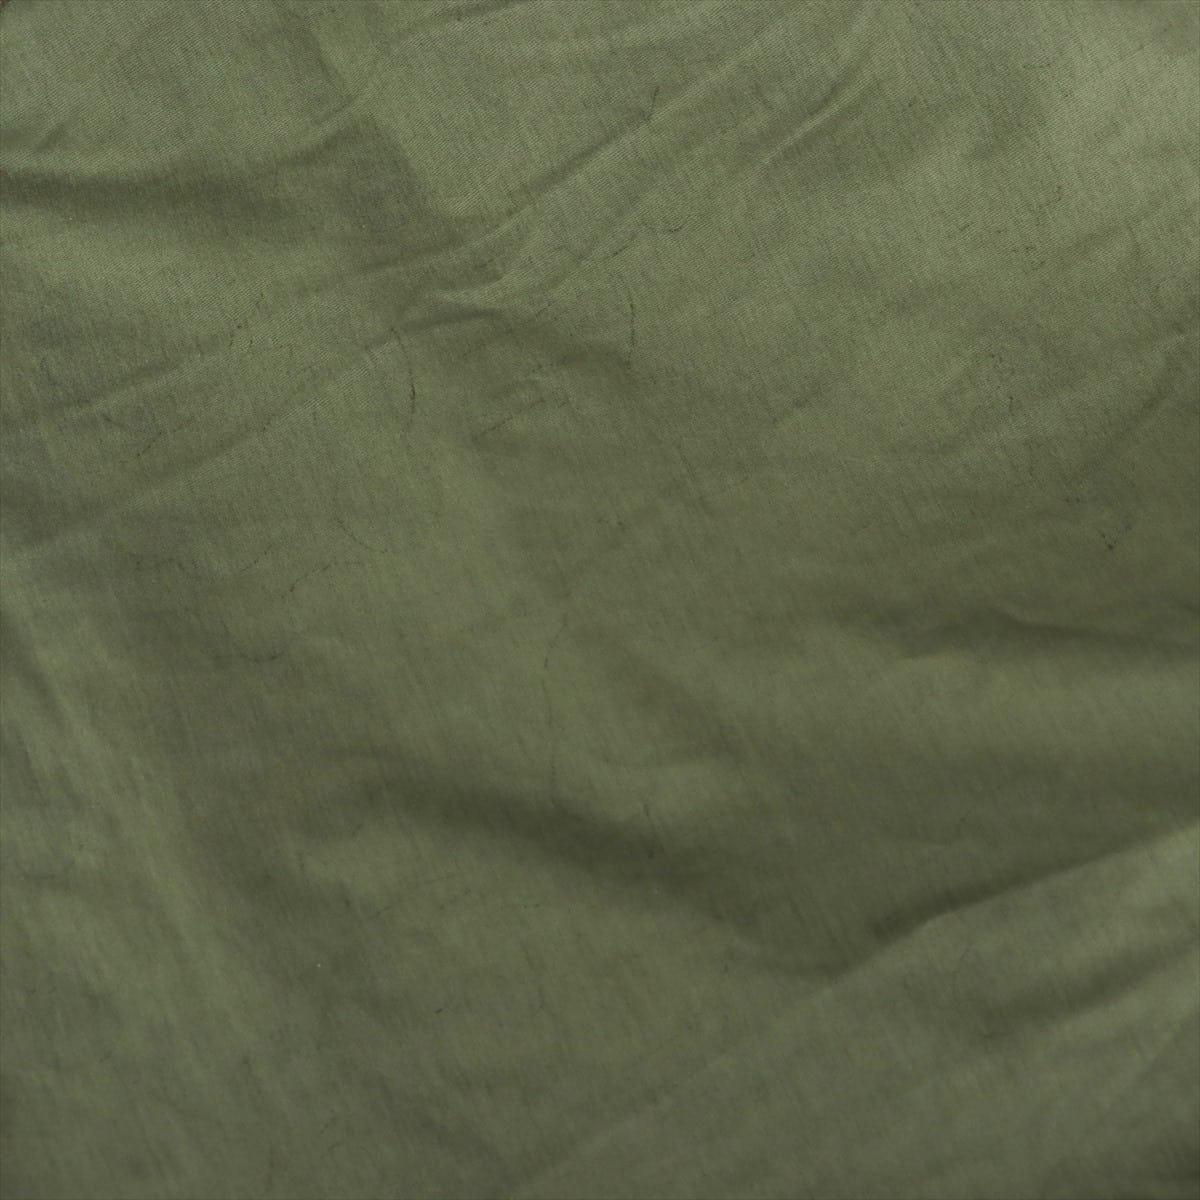 COACH Cotton T-shirt XS Men's Khaki  Kaffe Fasse Collaboration Camouflage